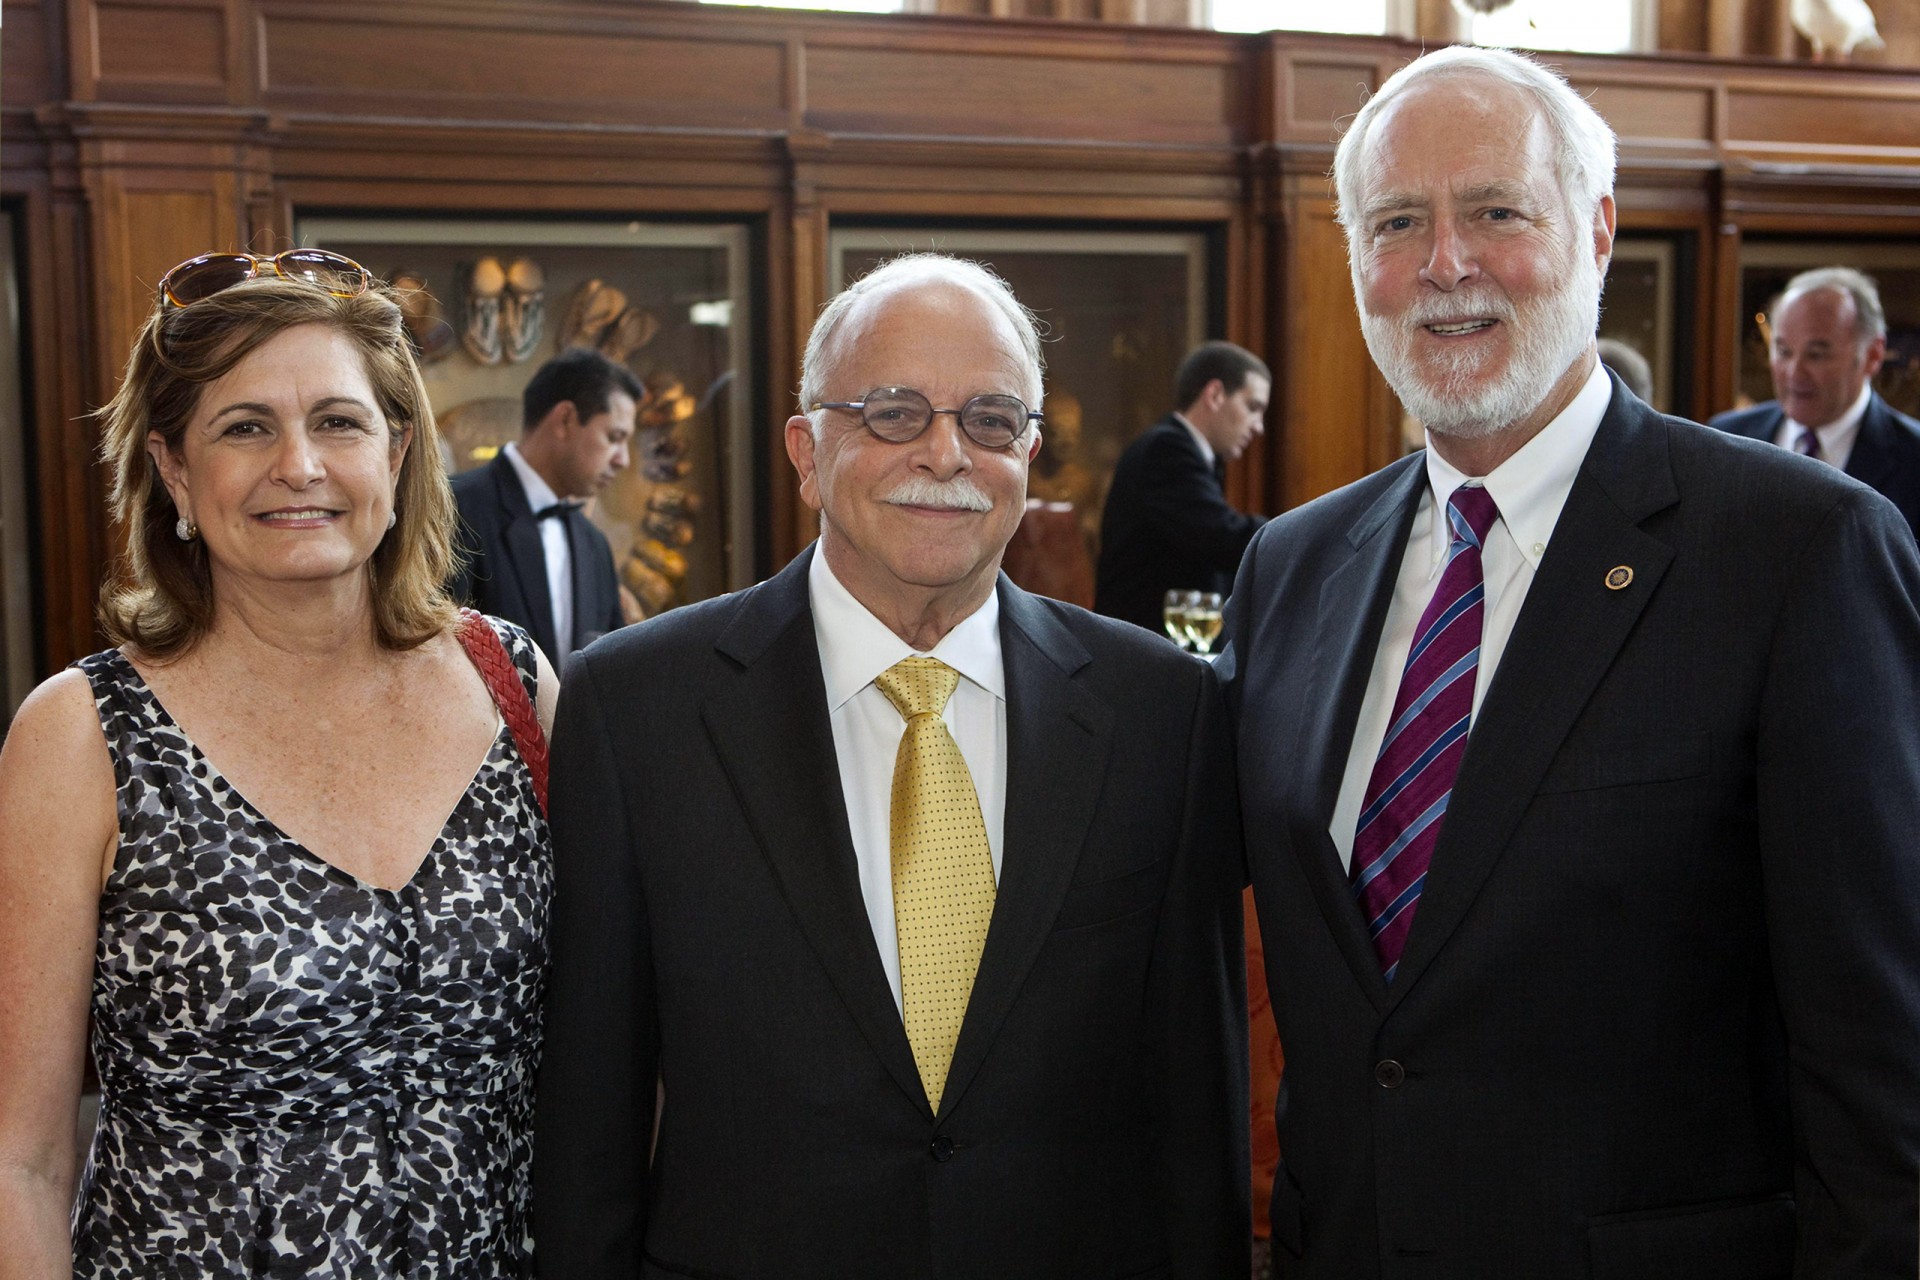 Ira Rubinoff, center, with his wife Anabella and Smithsonian Secretary Wayne Clough